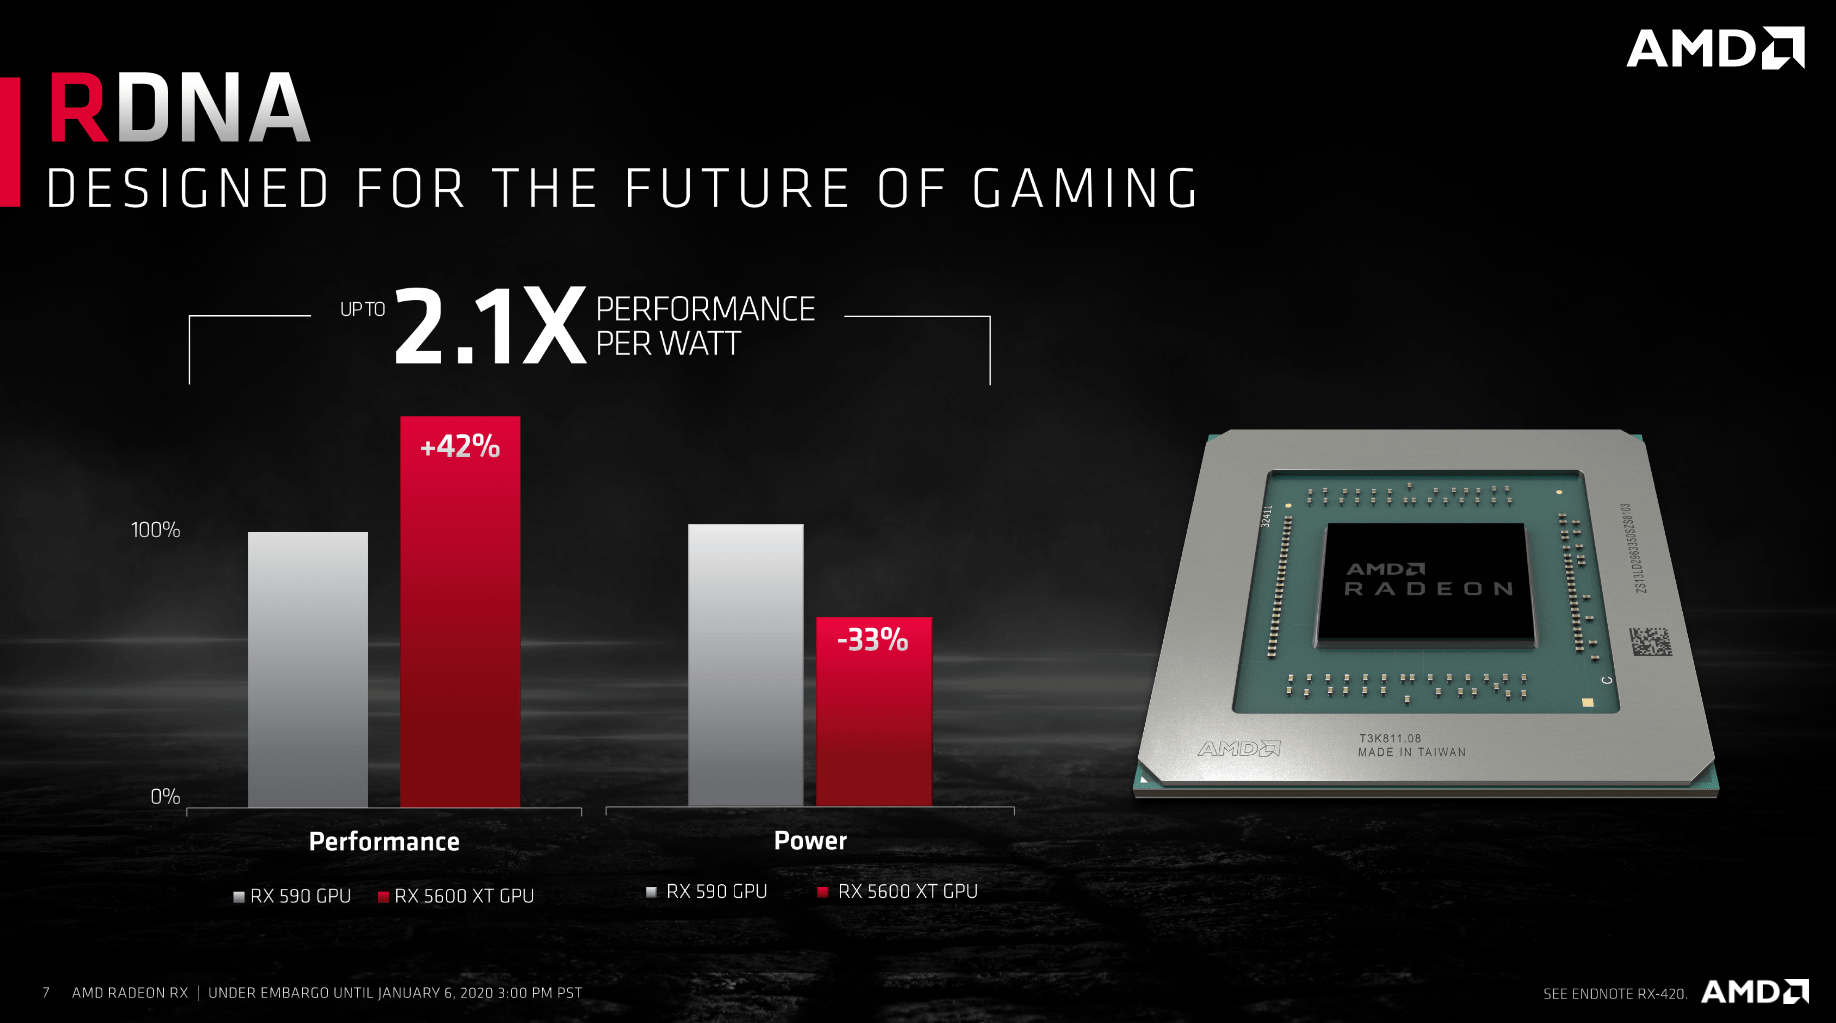 AMD Radeon Rx 5600XT CES 20